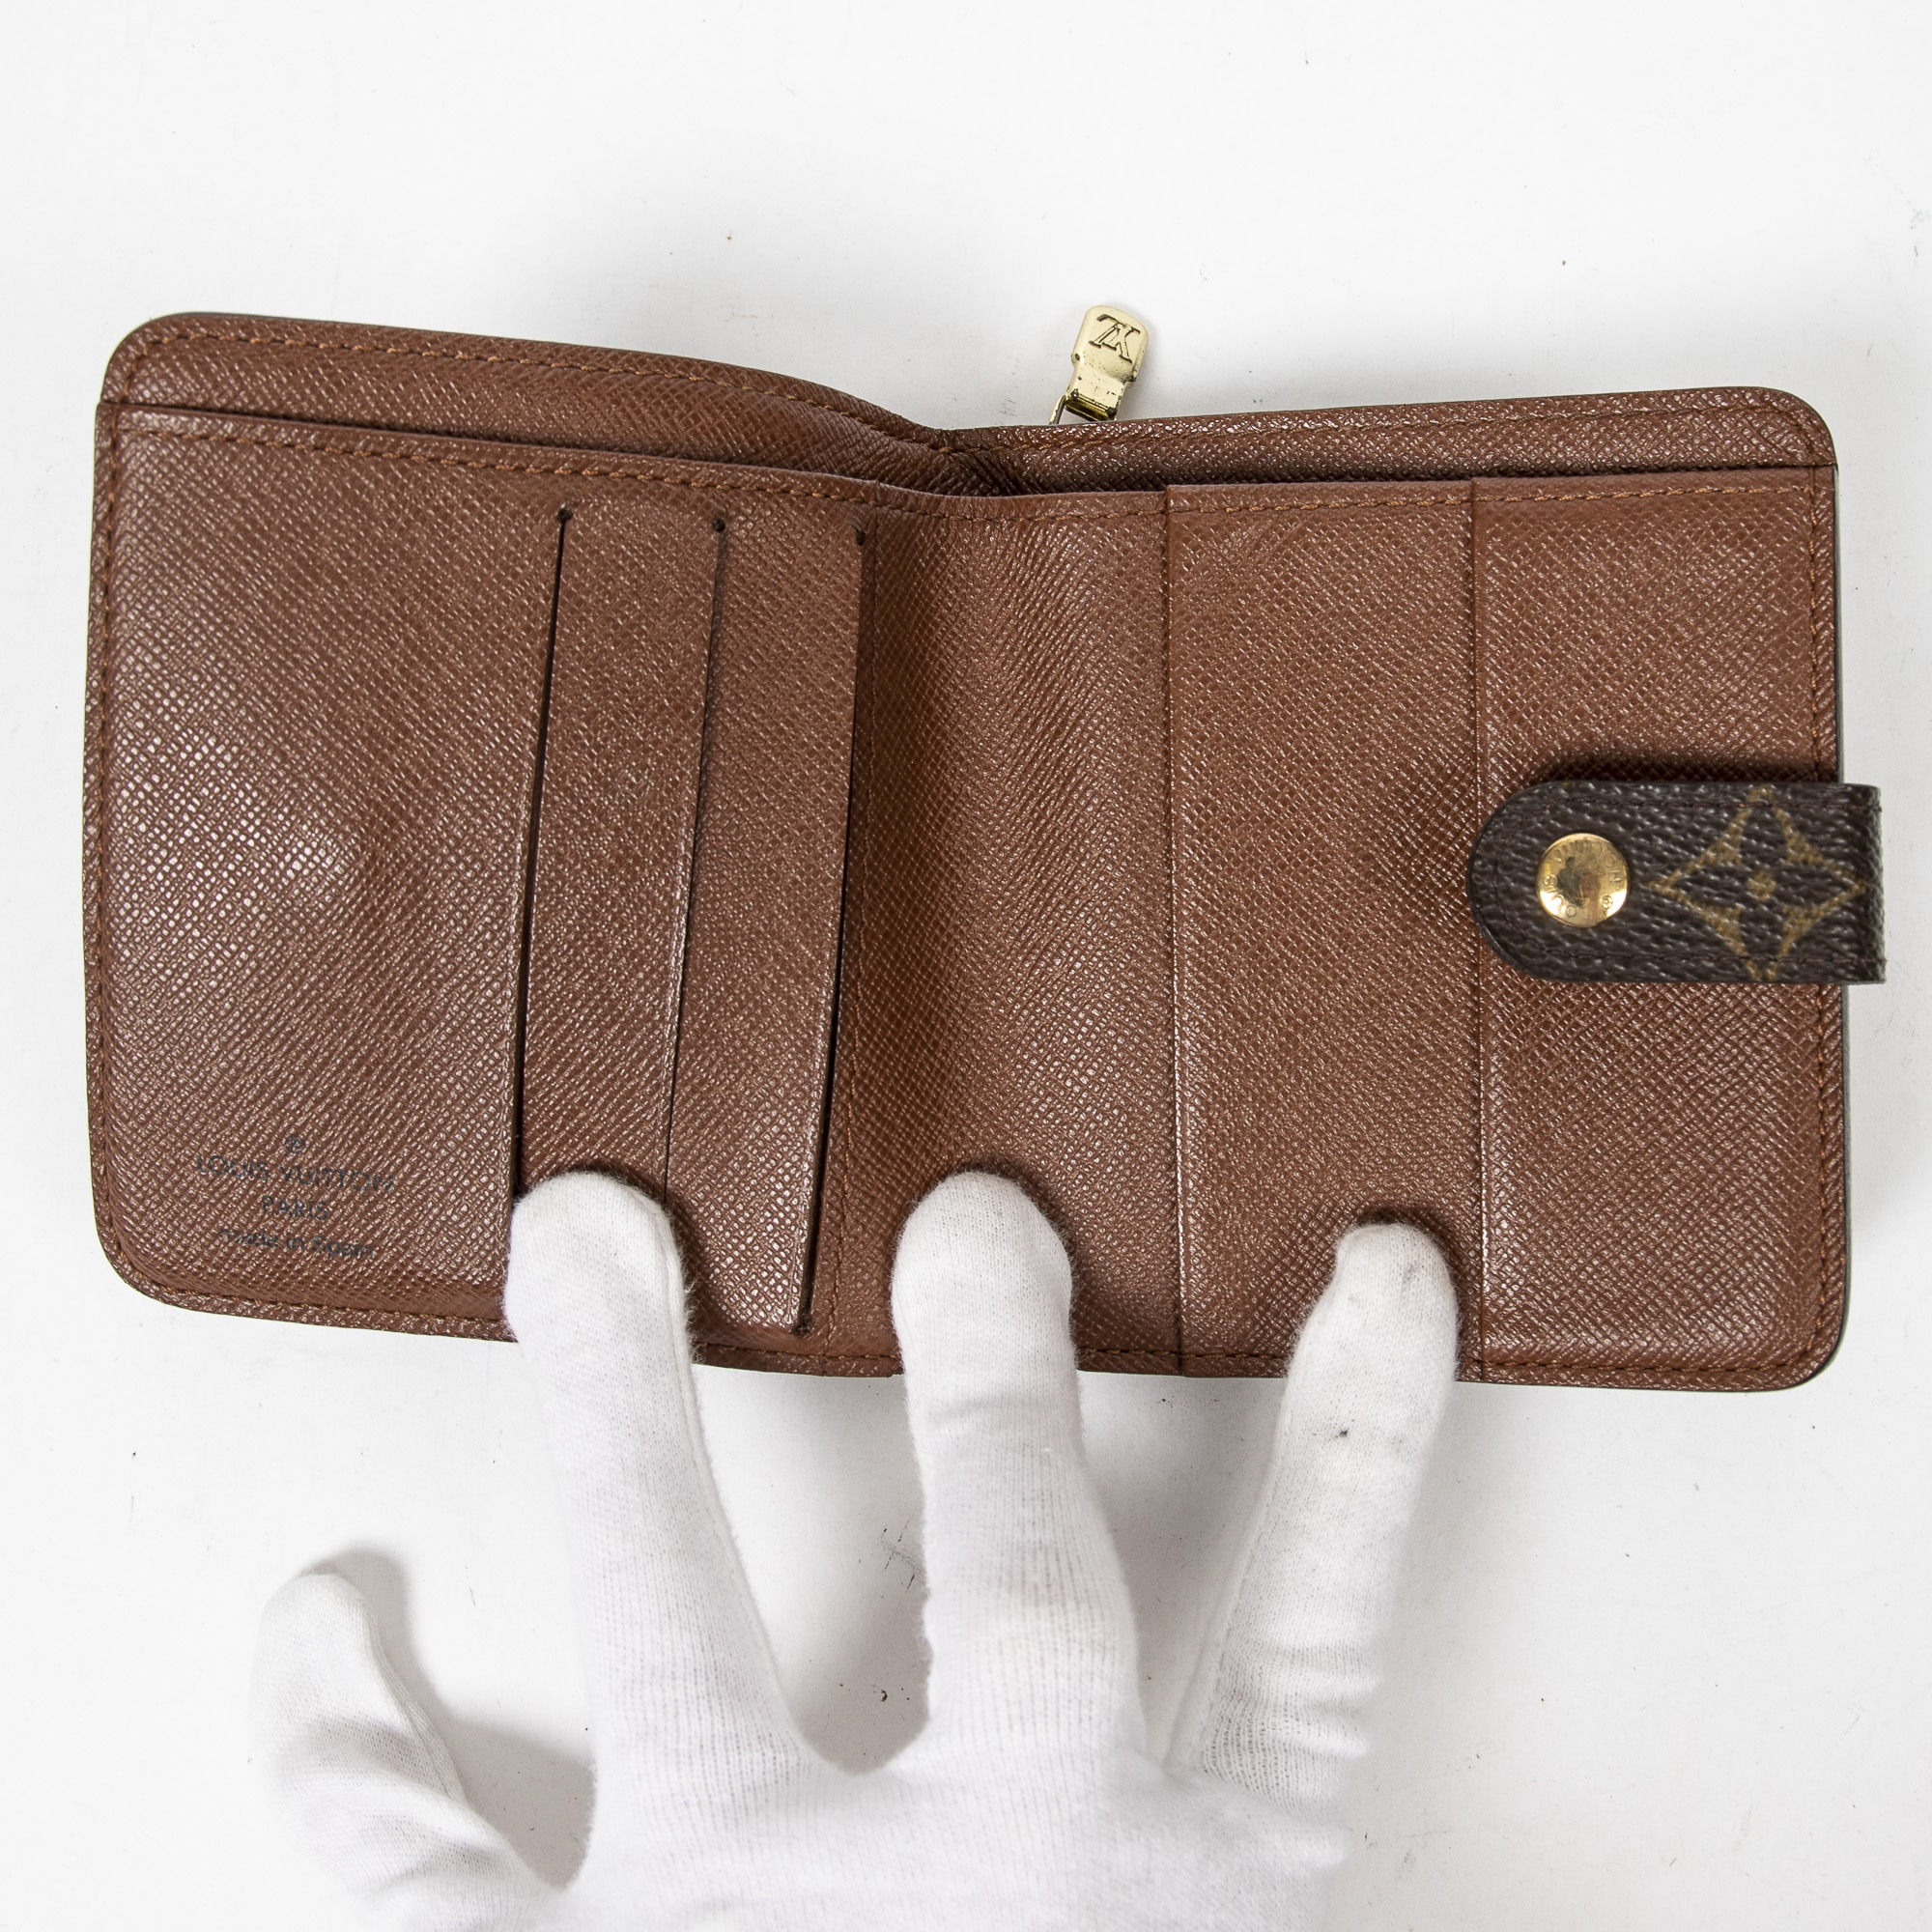 Lot 210 - Louis Vuitton Monogram Compact Zip Wallet